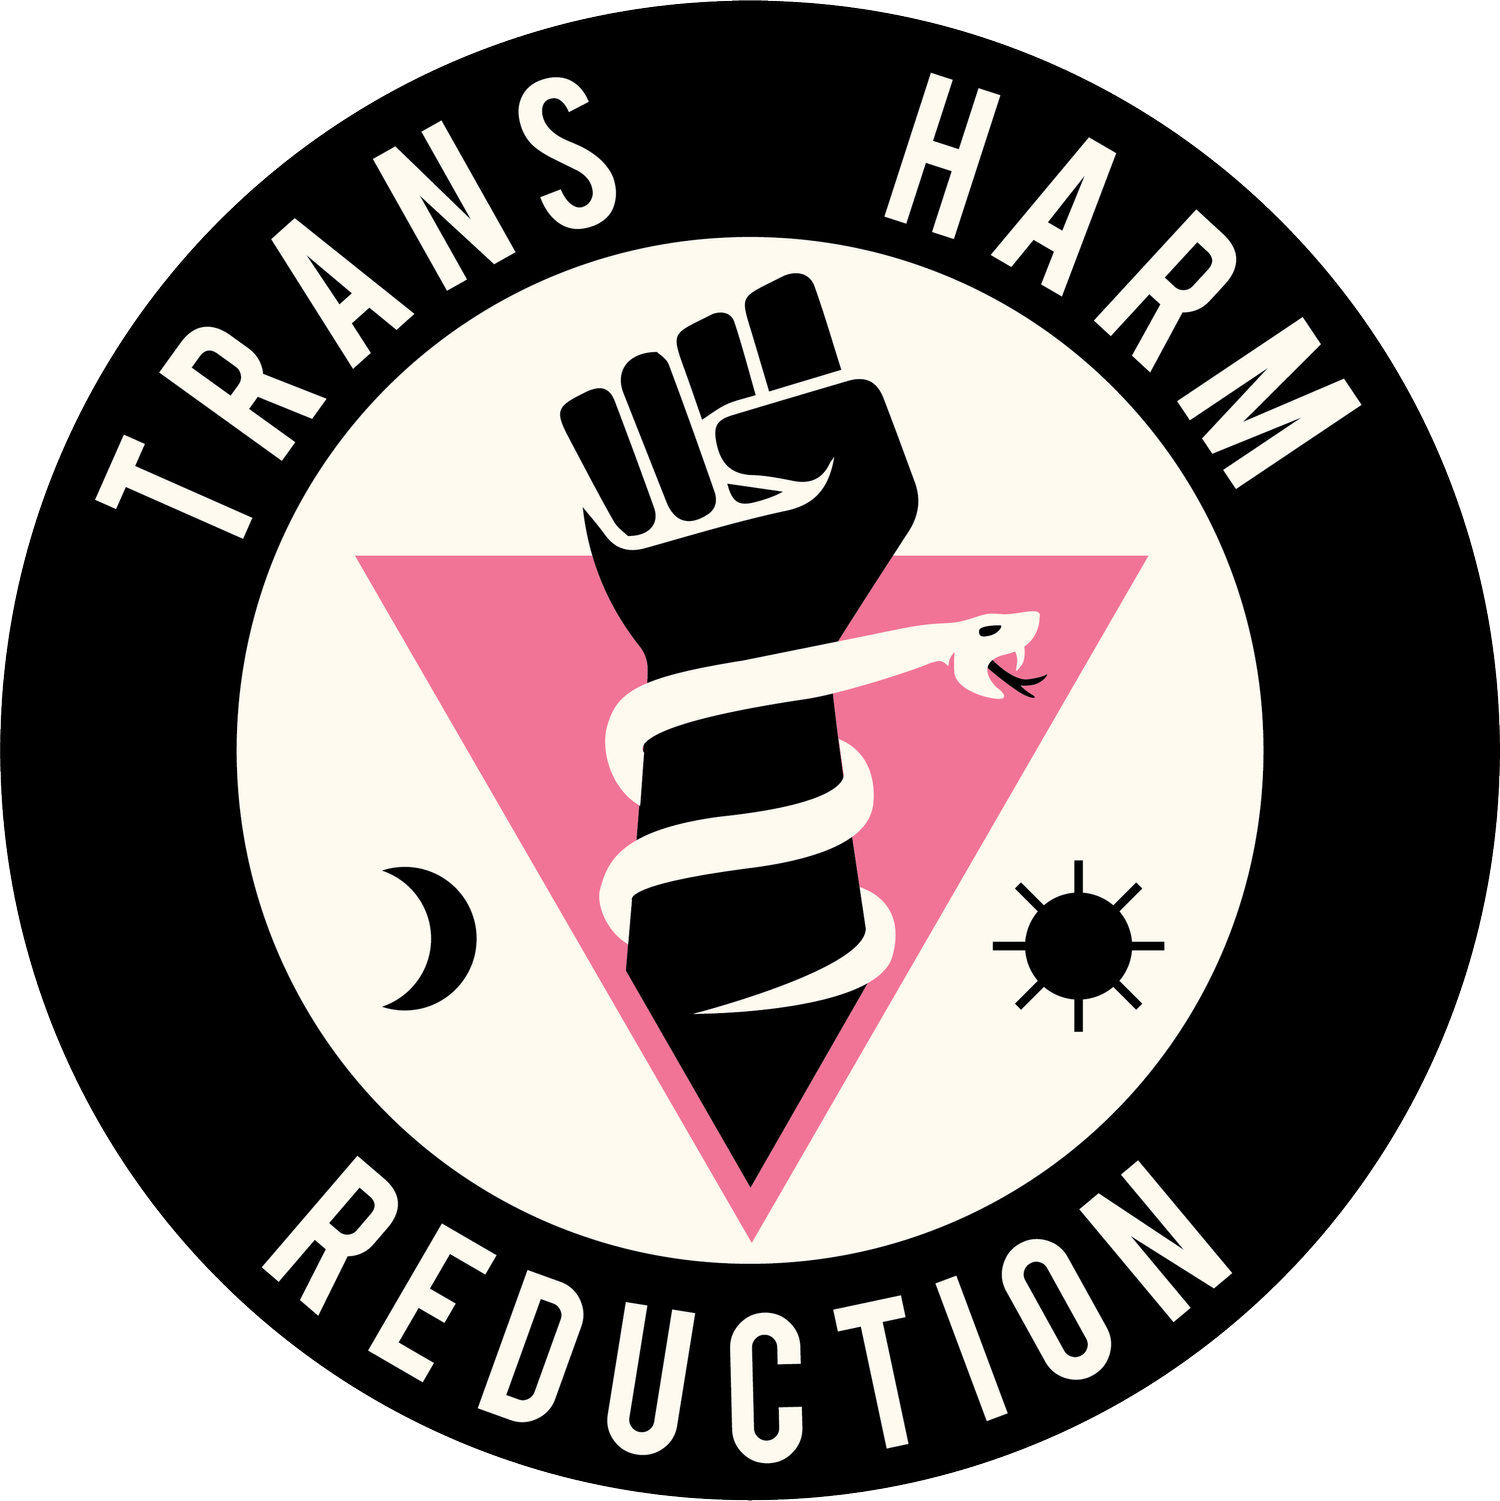 Trans Harm Reduction